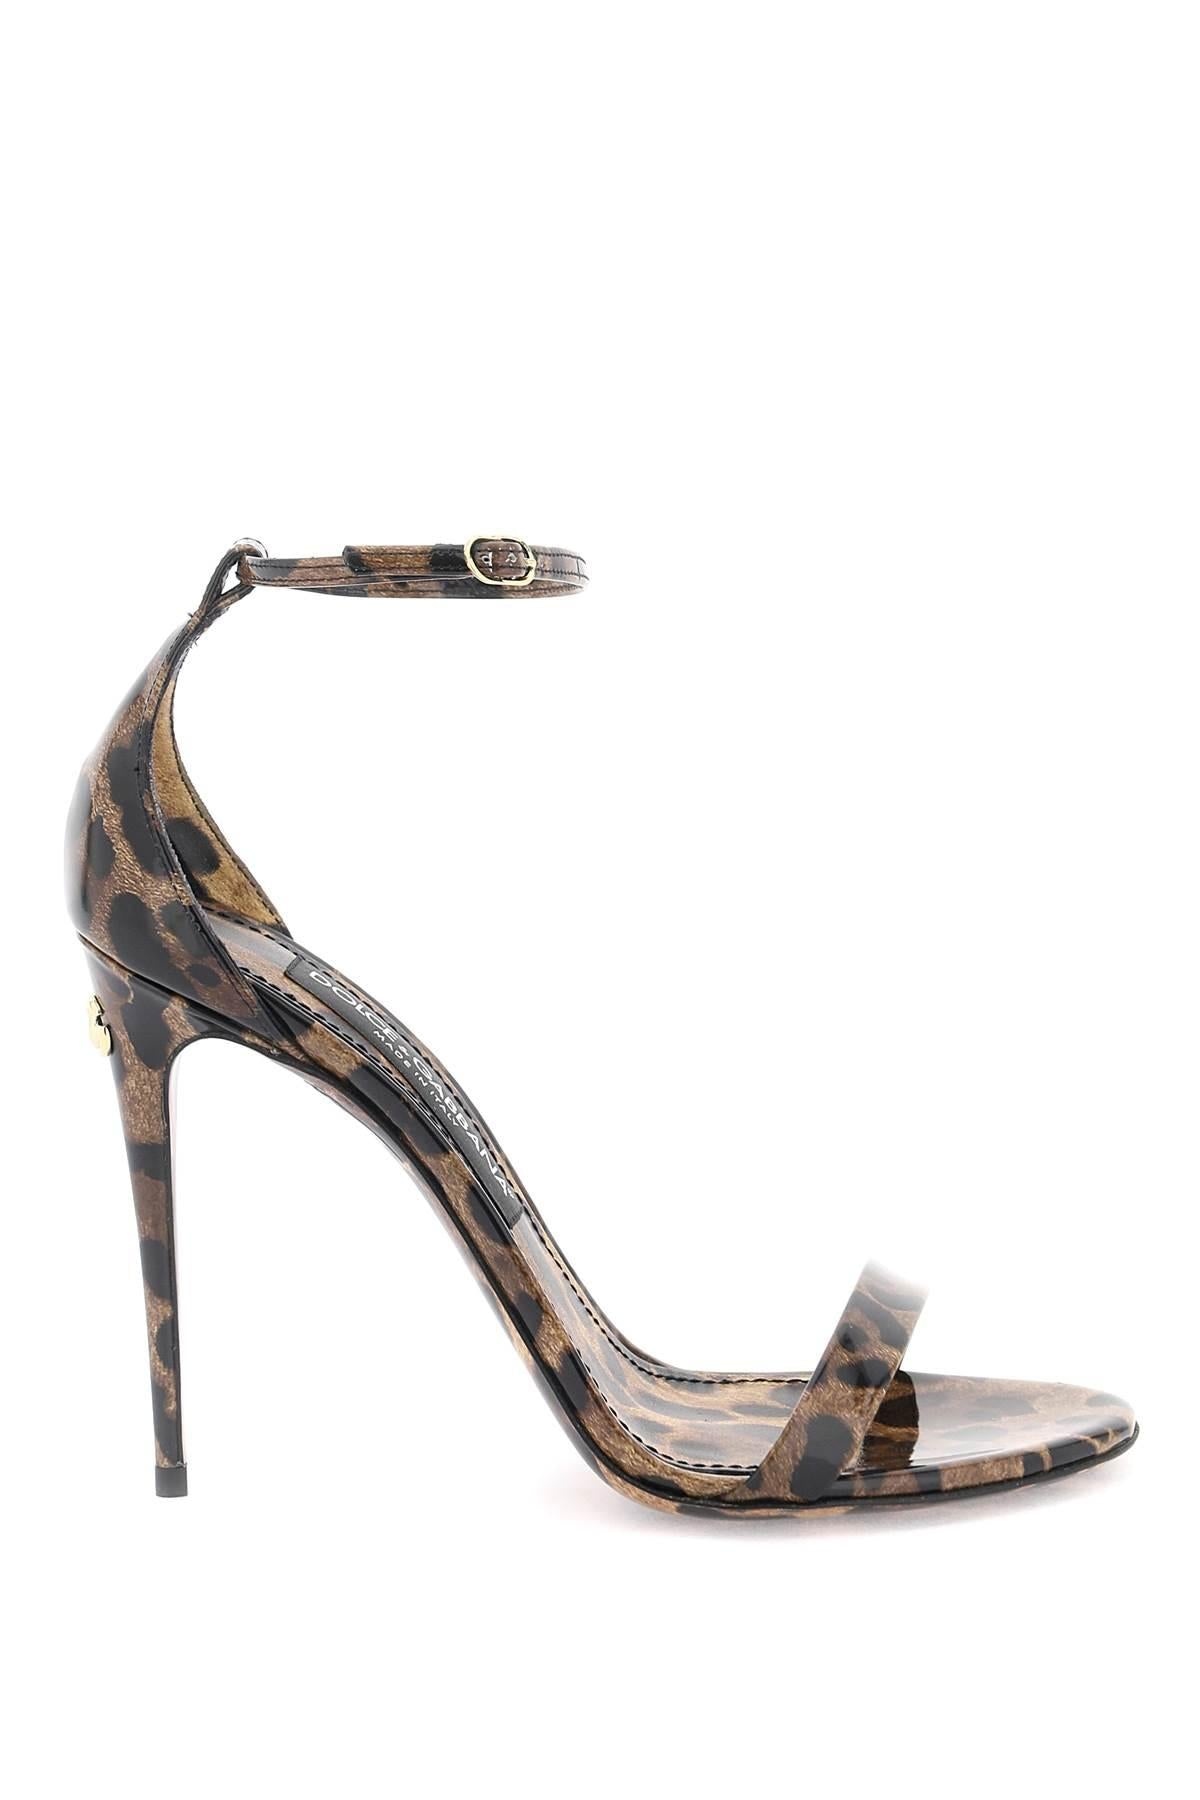 Dolce & Gabbana Leopard Print Glossy Leather Sandals - 1